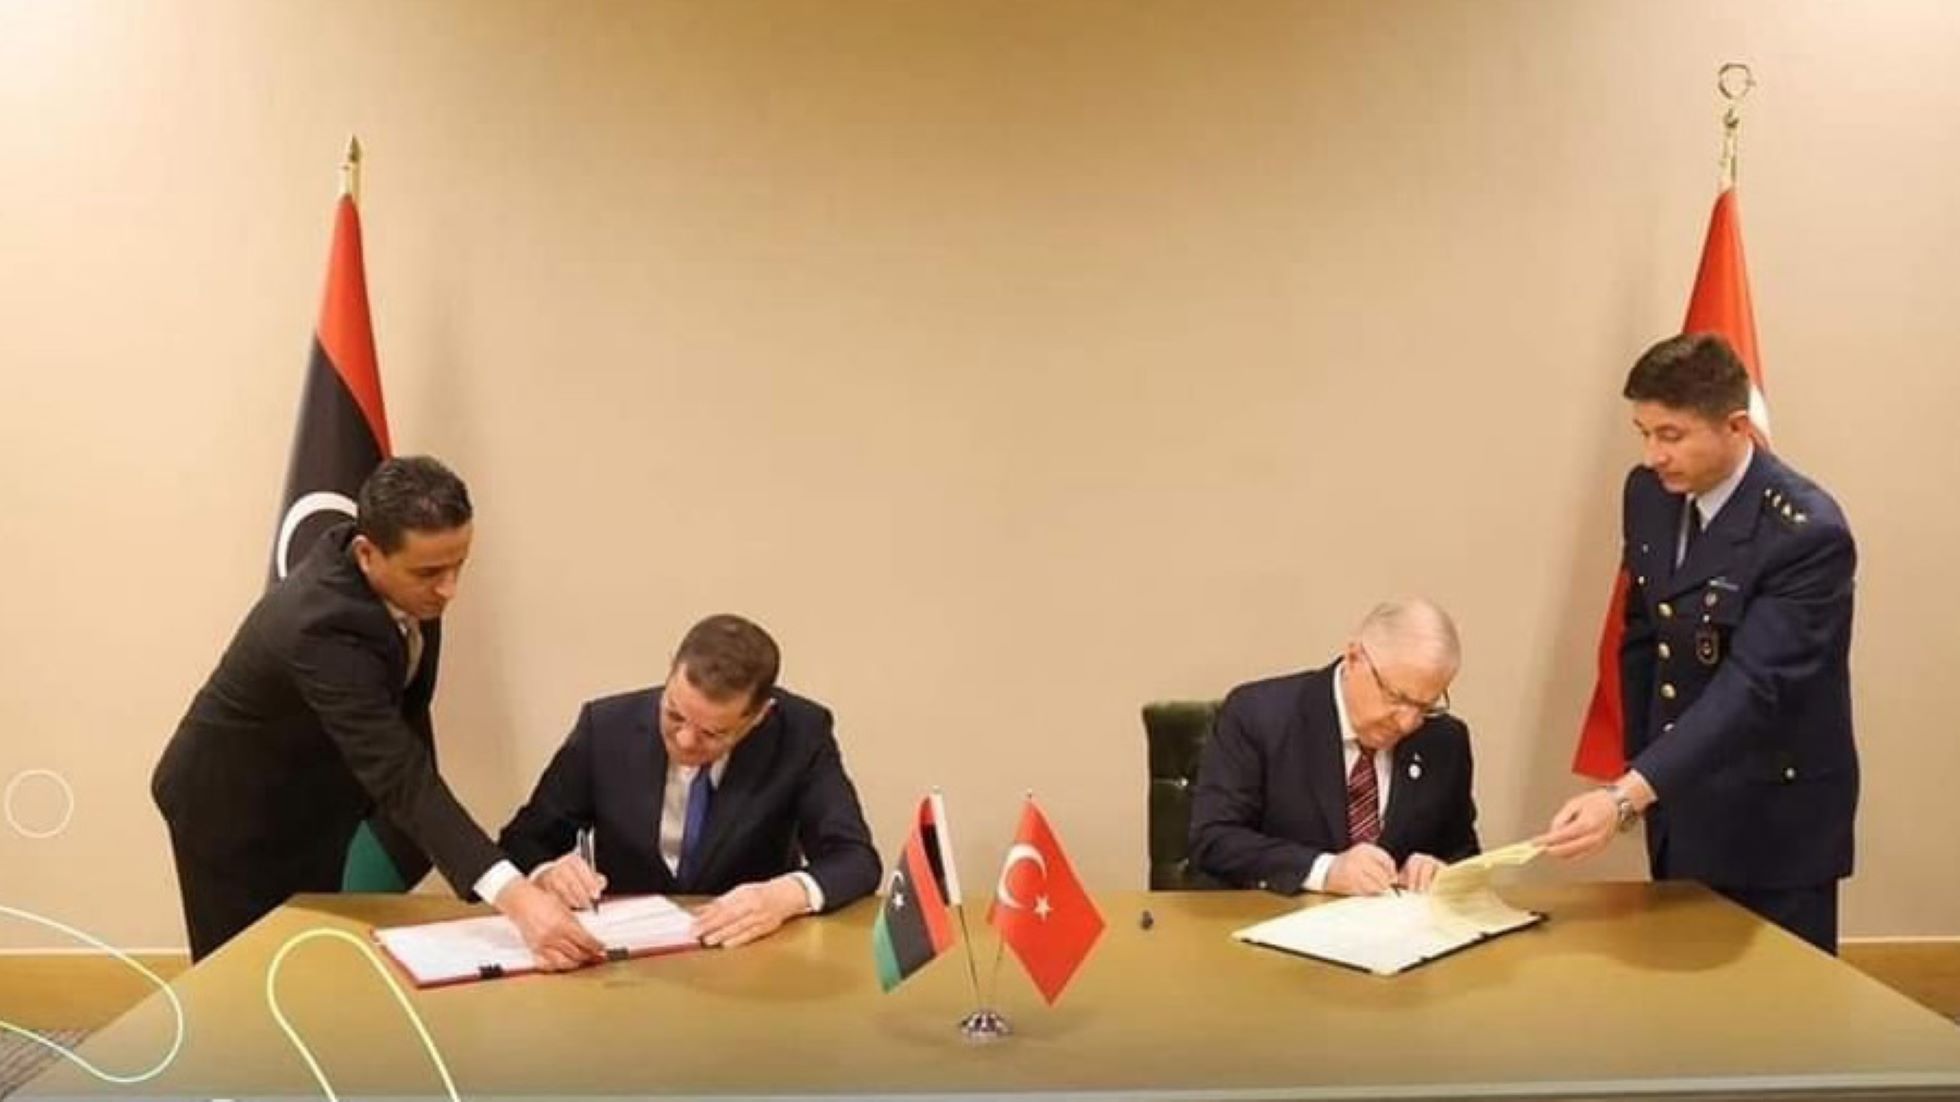 Libya, Türkiye Sign MoU On Military Cooperation